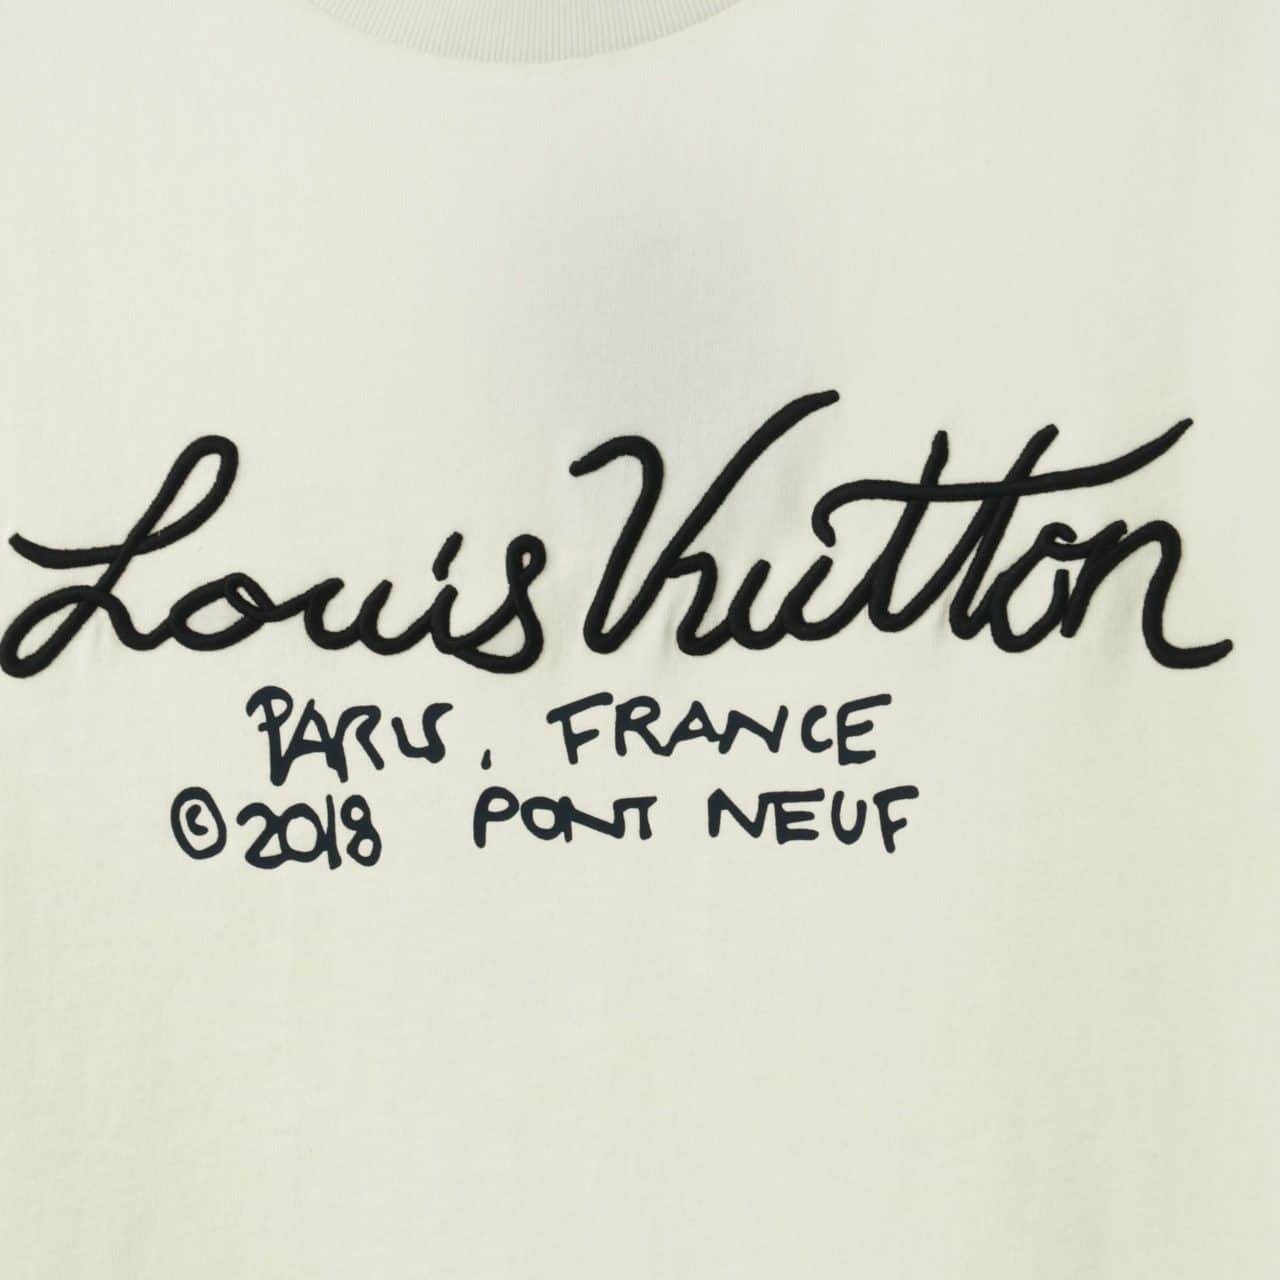 Buy Replica Louis Vuitton Embossed LV T-Shirt In White - Buy